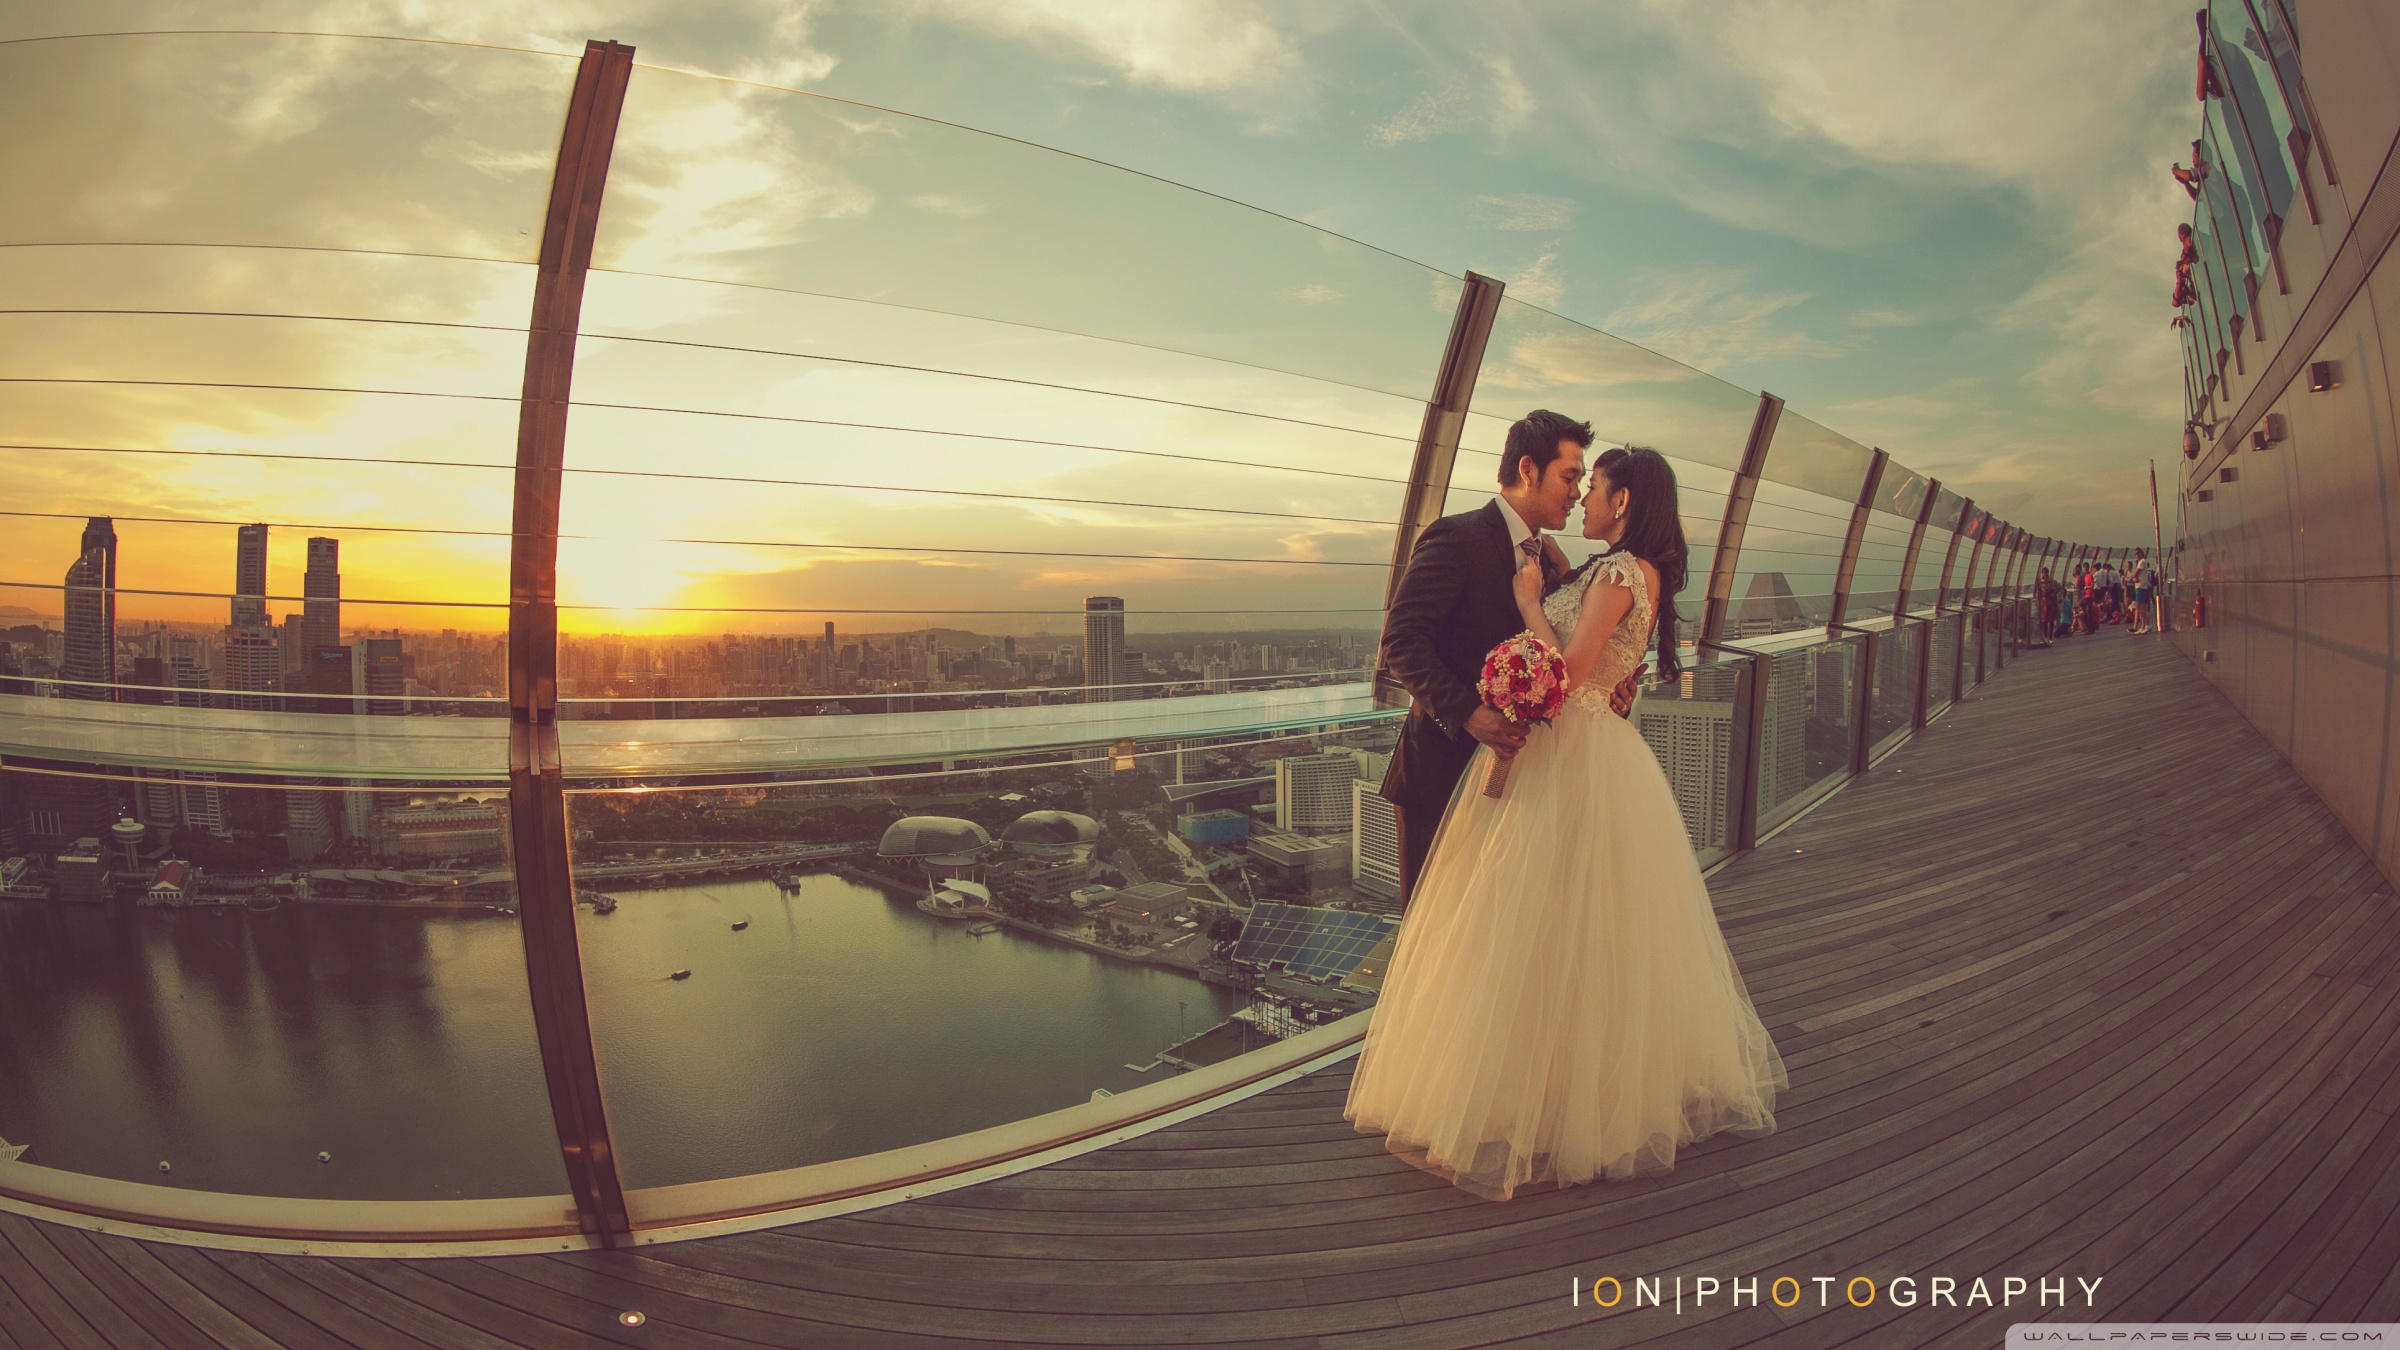 wedding wallpaper download,photograph,dress,bride,sky,gown